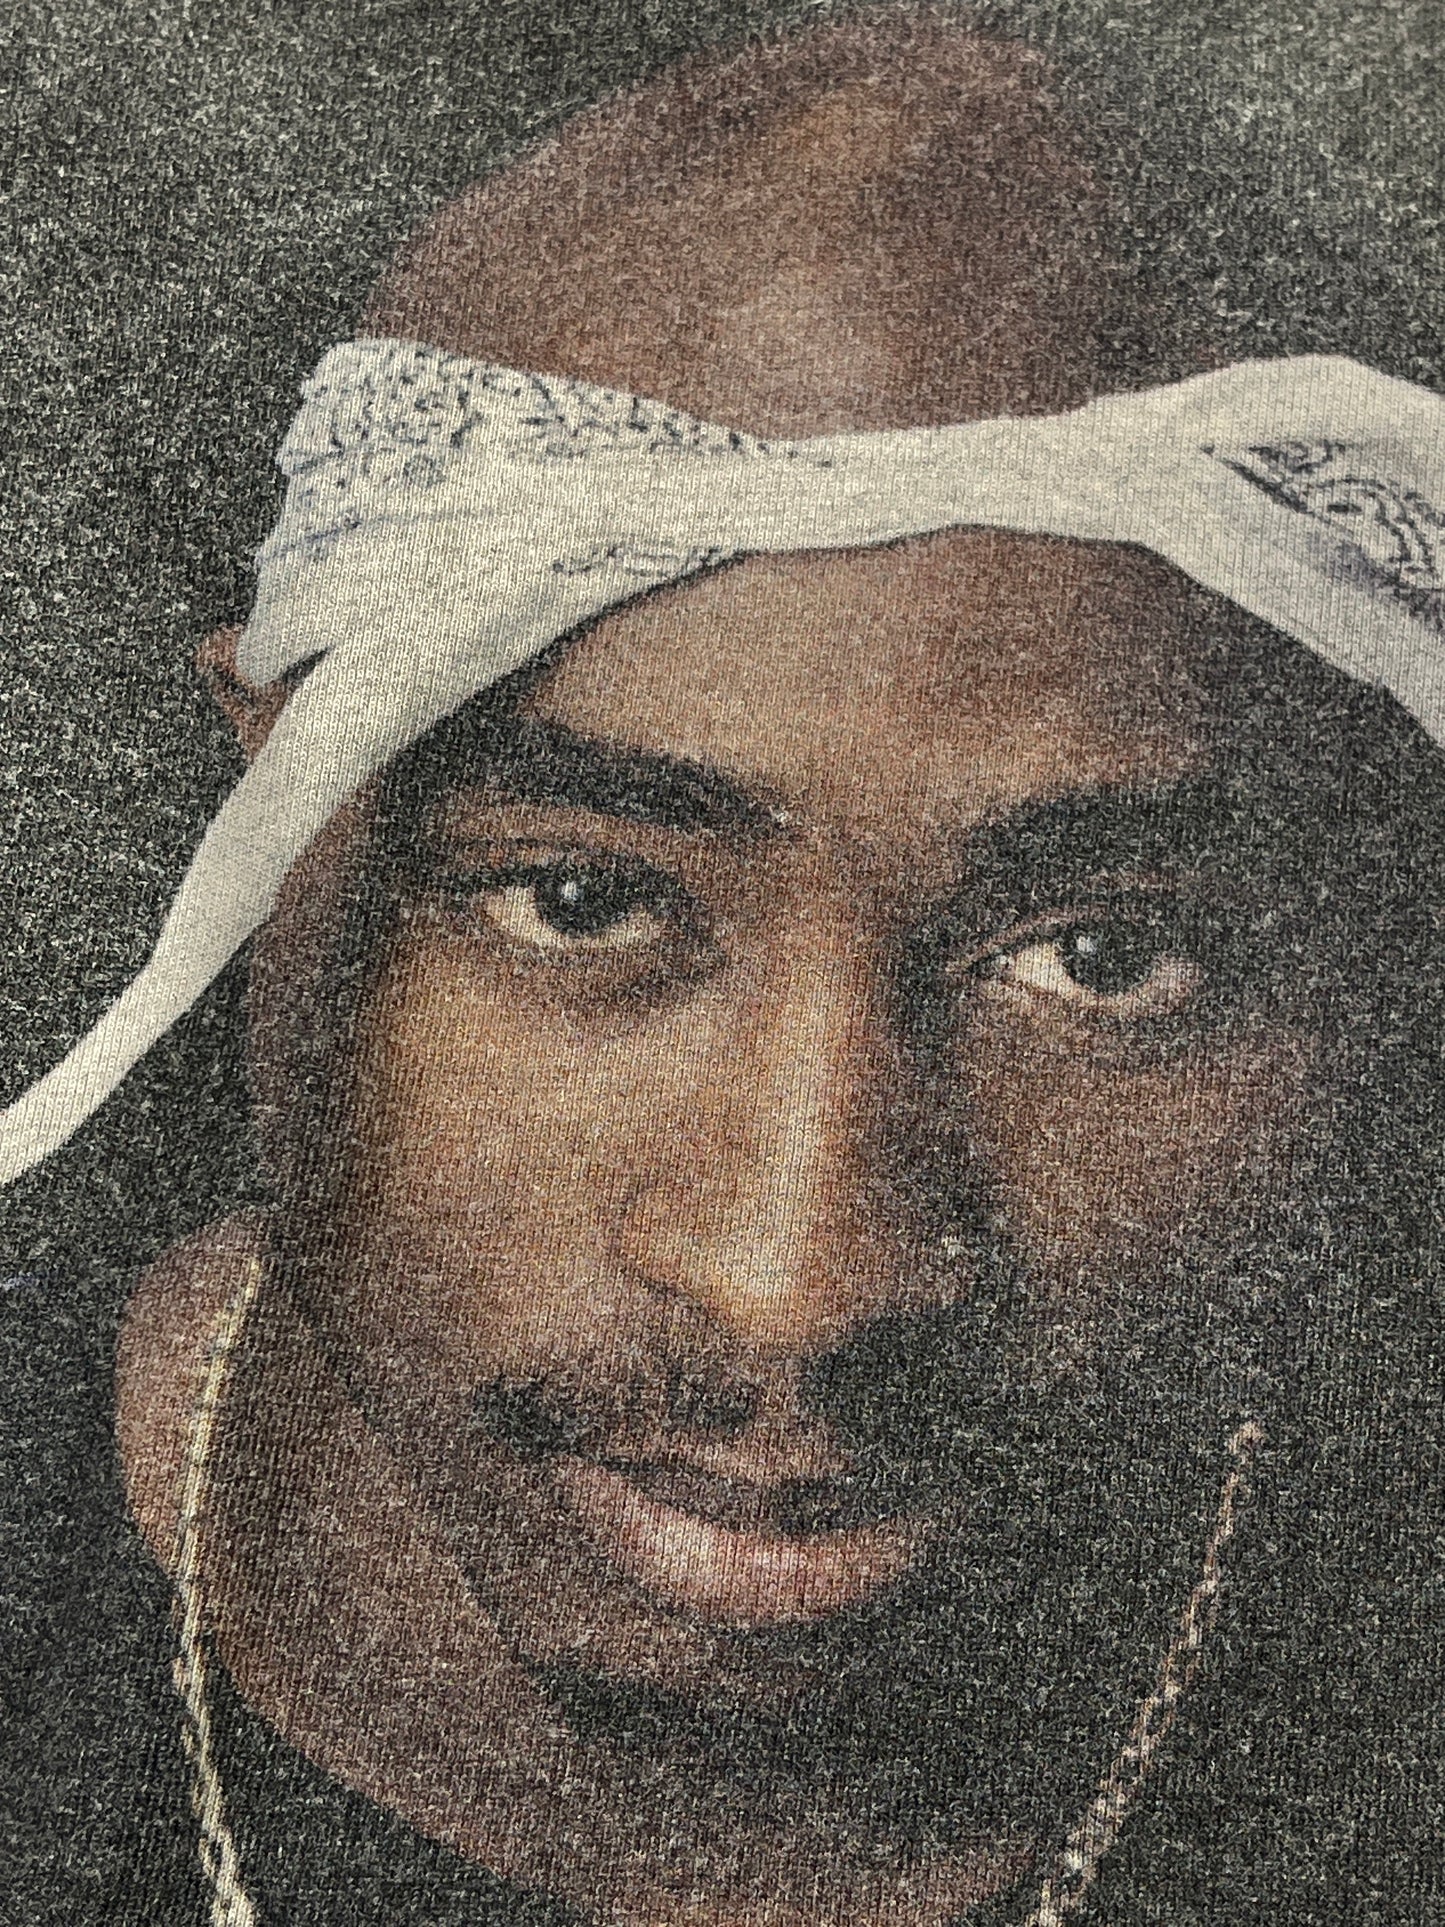 Vintage Tupac T-Shirt Portrait 2Pac